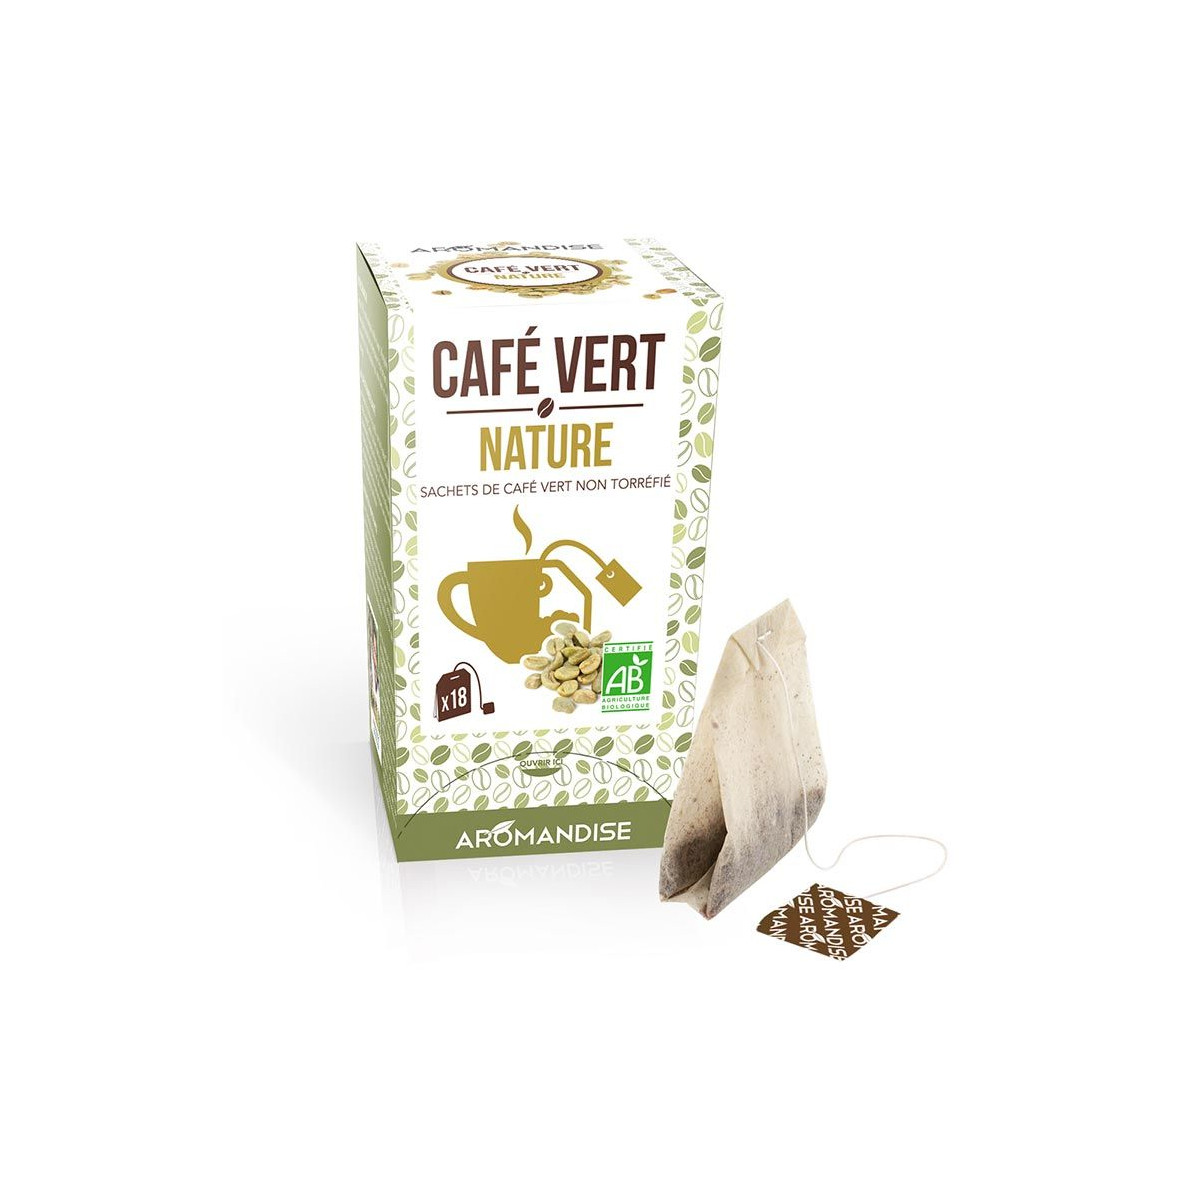 Café vert nature - Aromandise - Packaging